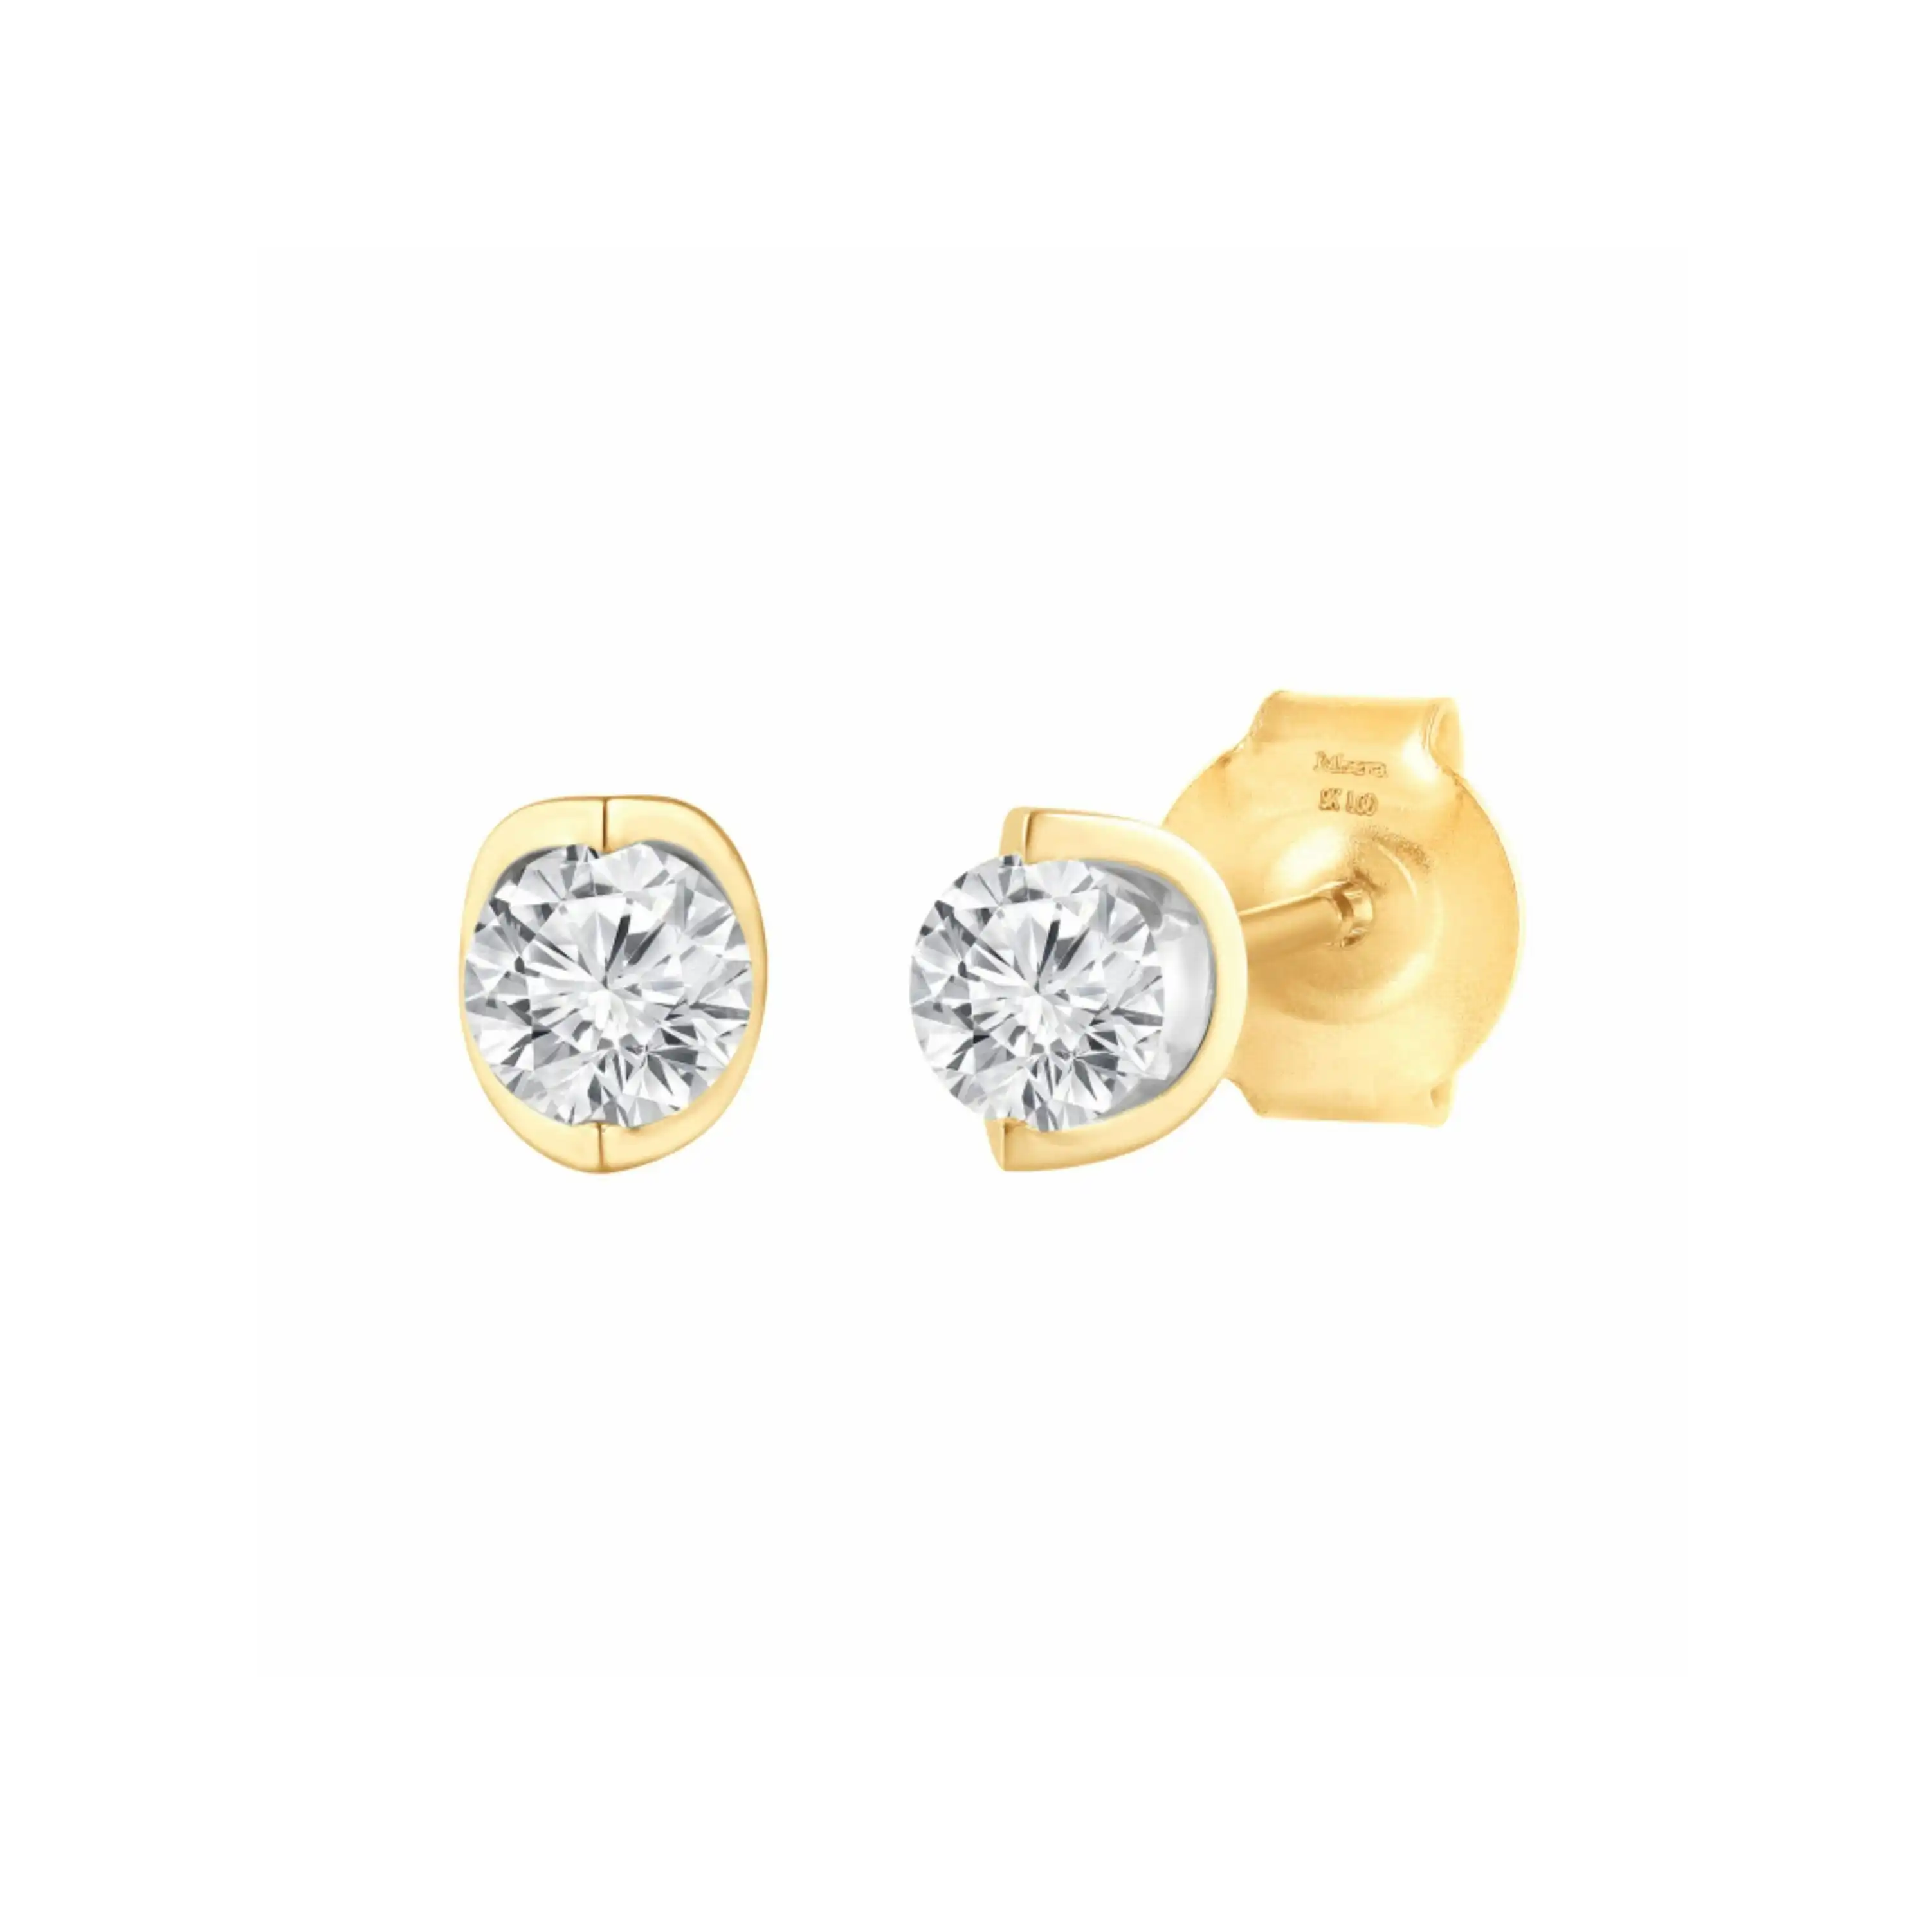 Meera Bezel Look 1/3ct Laboratory Grown Solitaire Diamond Earrings in 9ct Yellow Gold